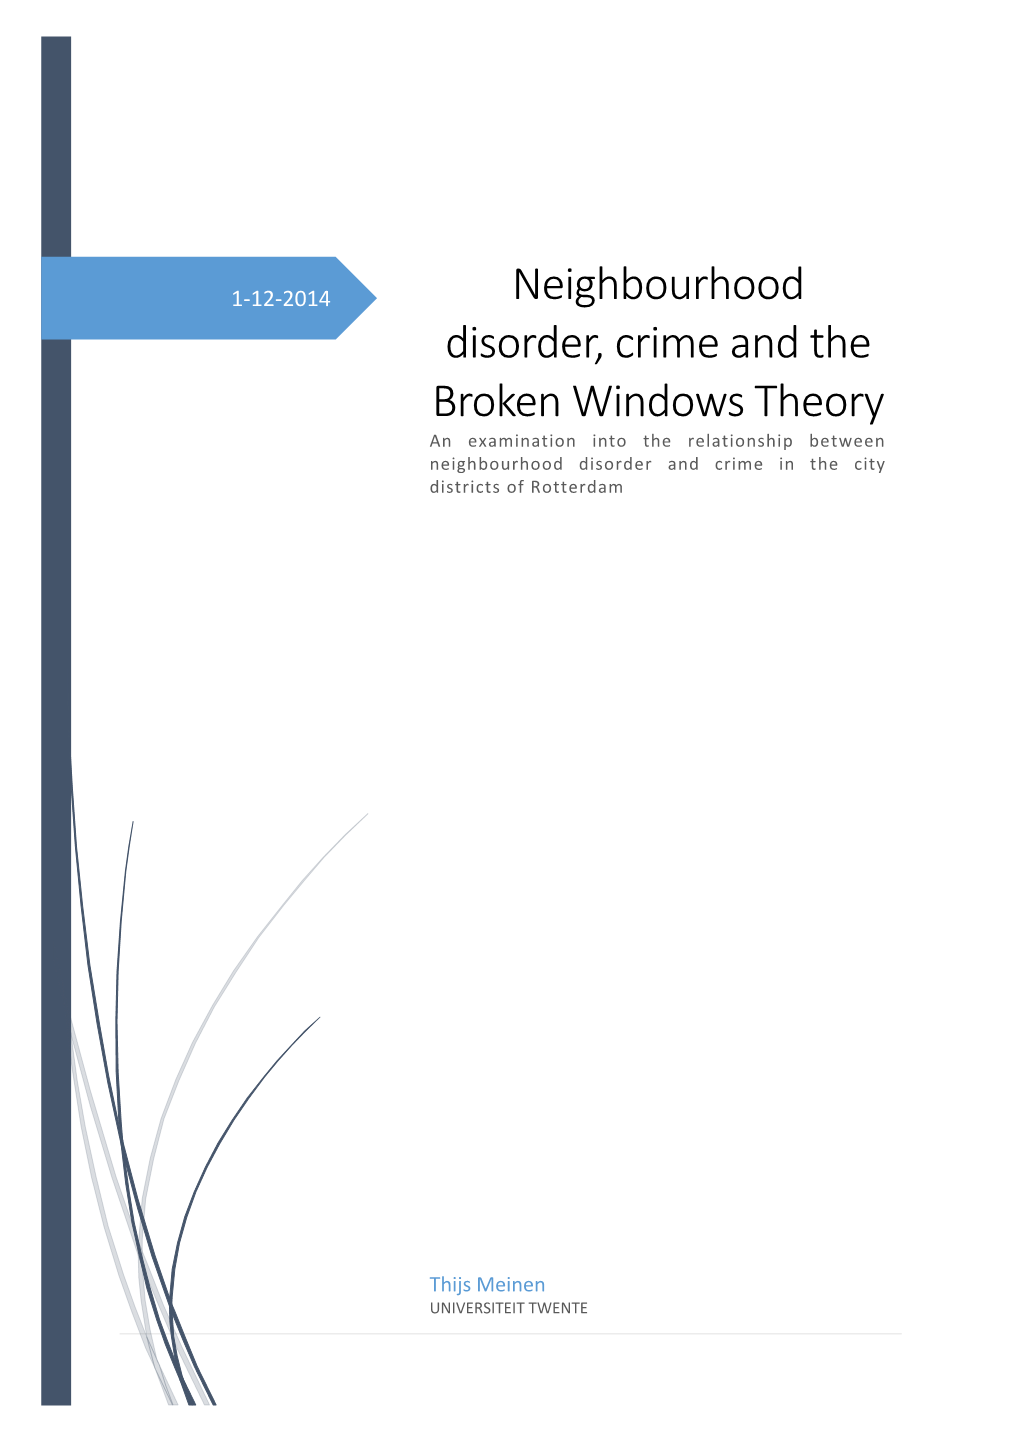 Neighborhood Disorder, Crime and the Broken Windows Theory